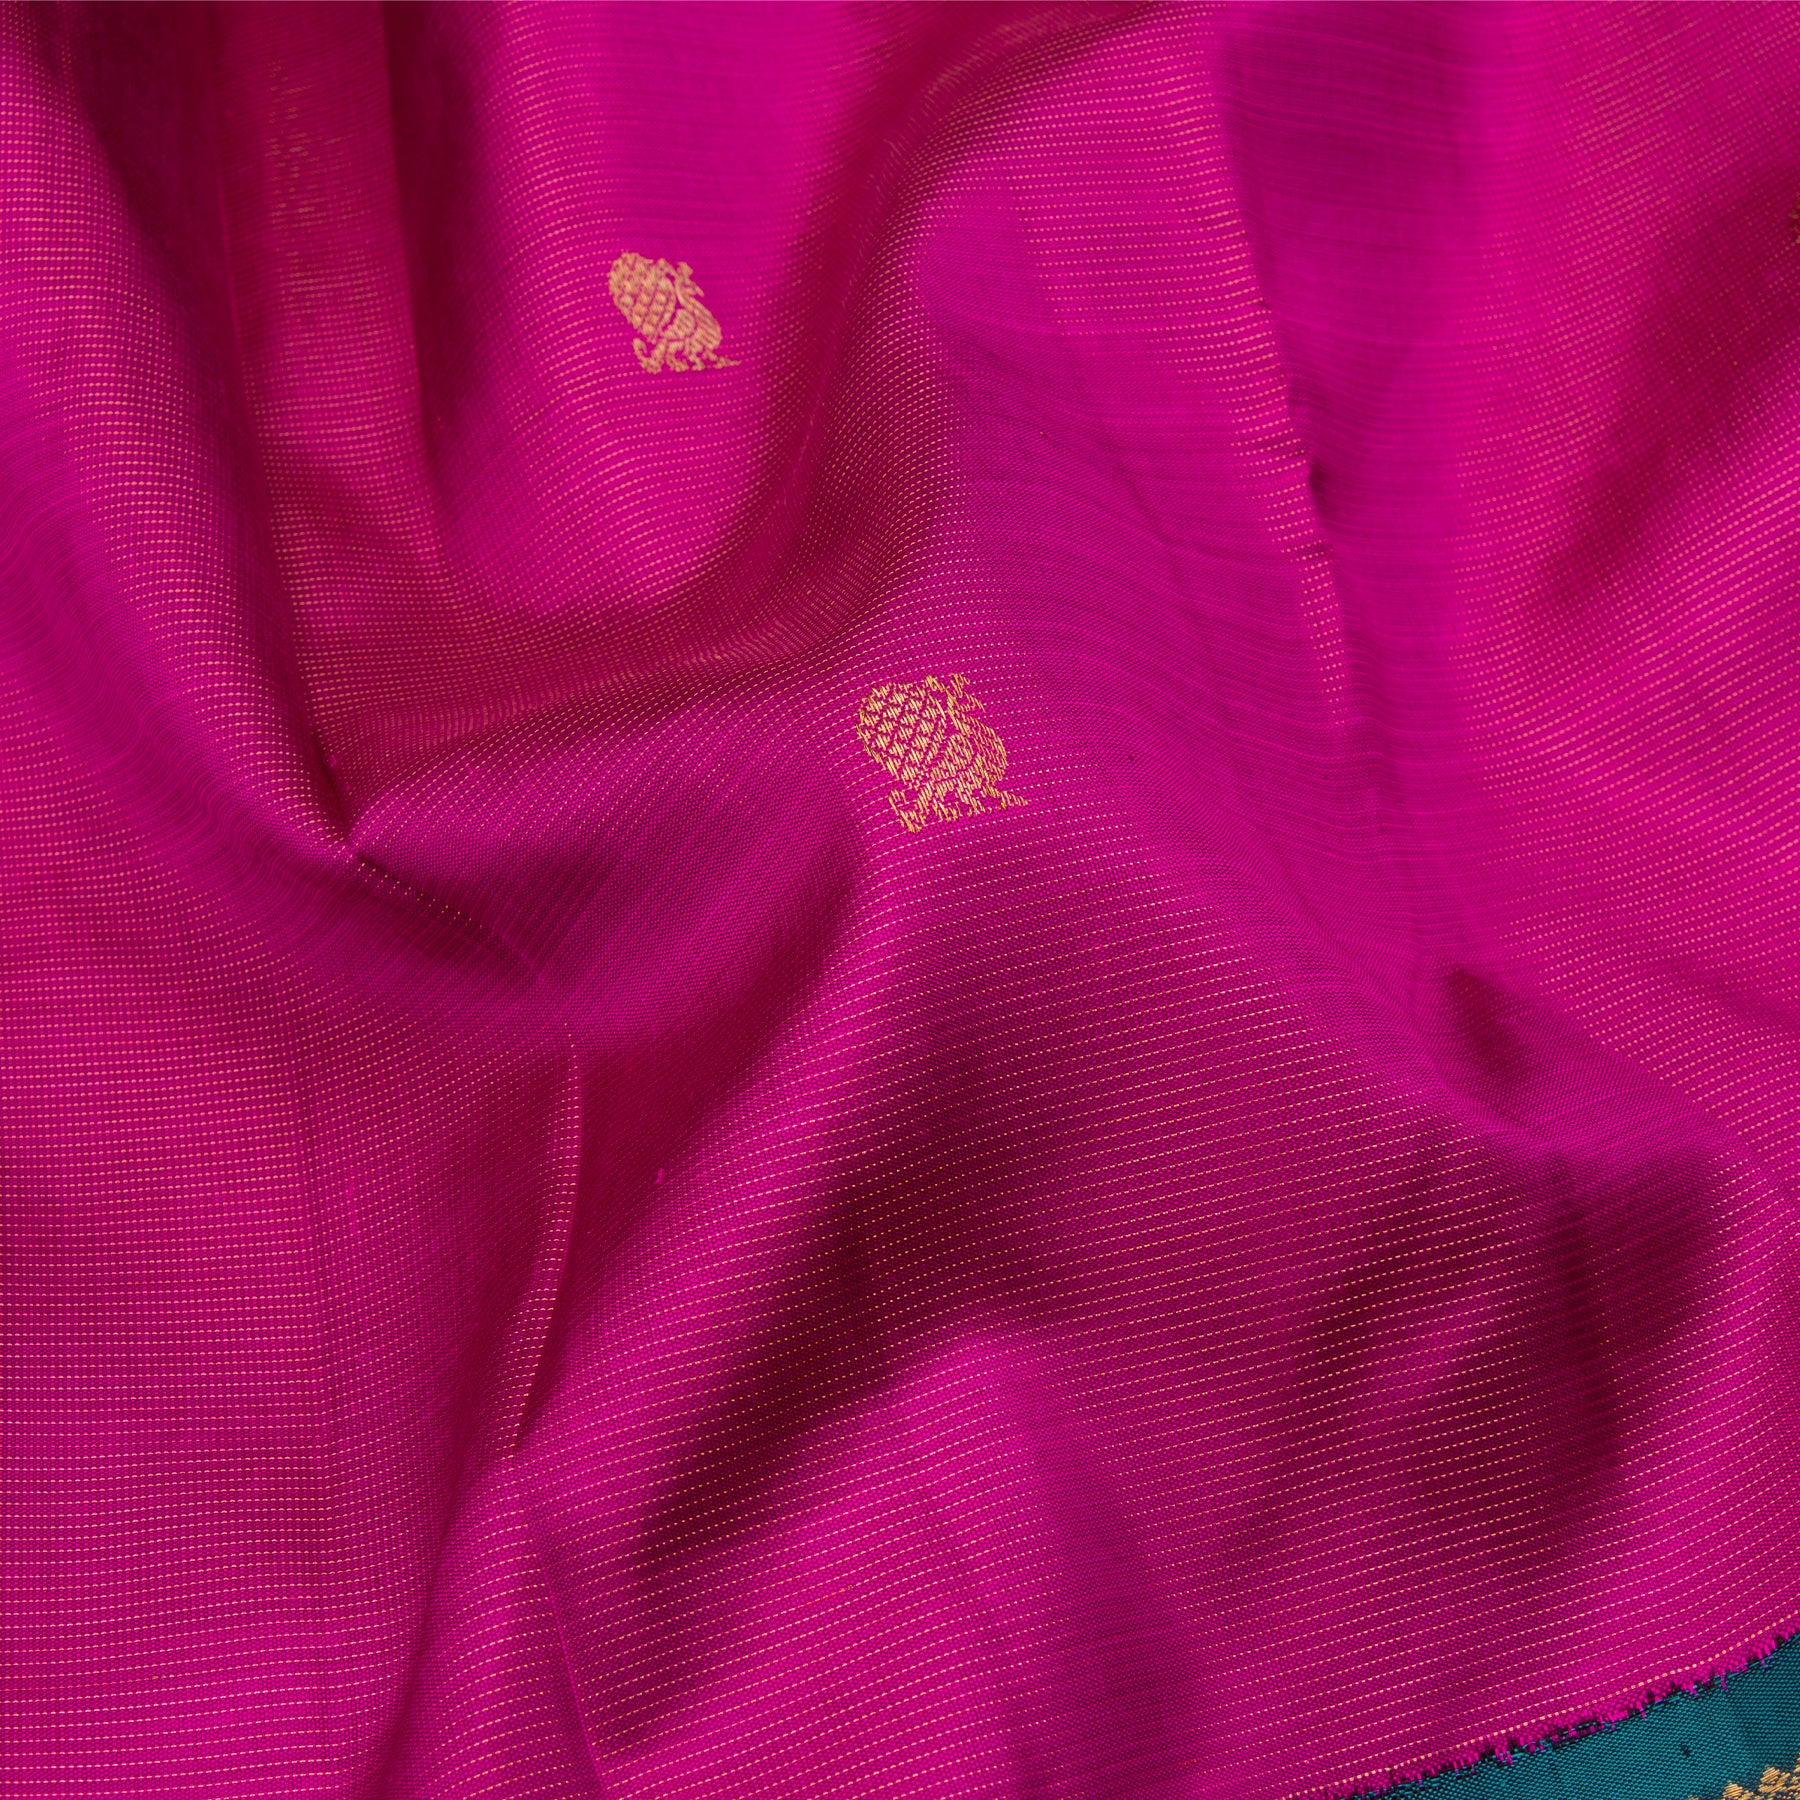 Kanakavalli puts up silk expo at Urban Spice Gallery in Madurai - The Hindu